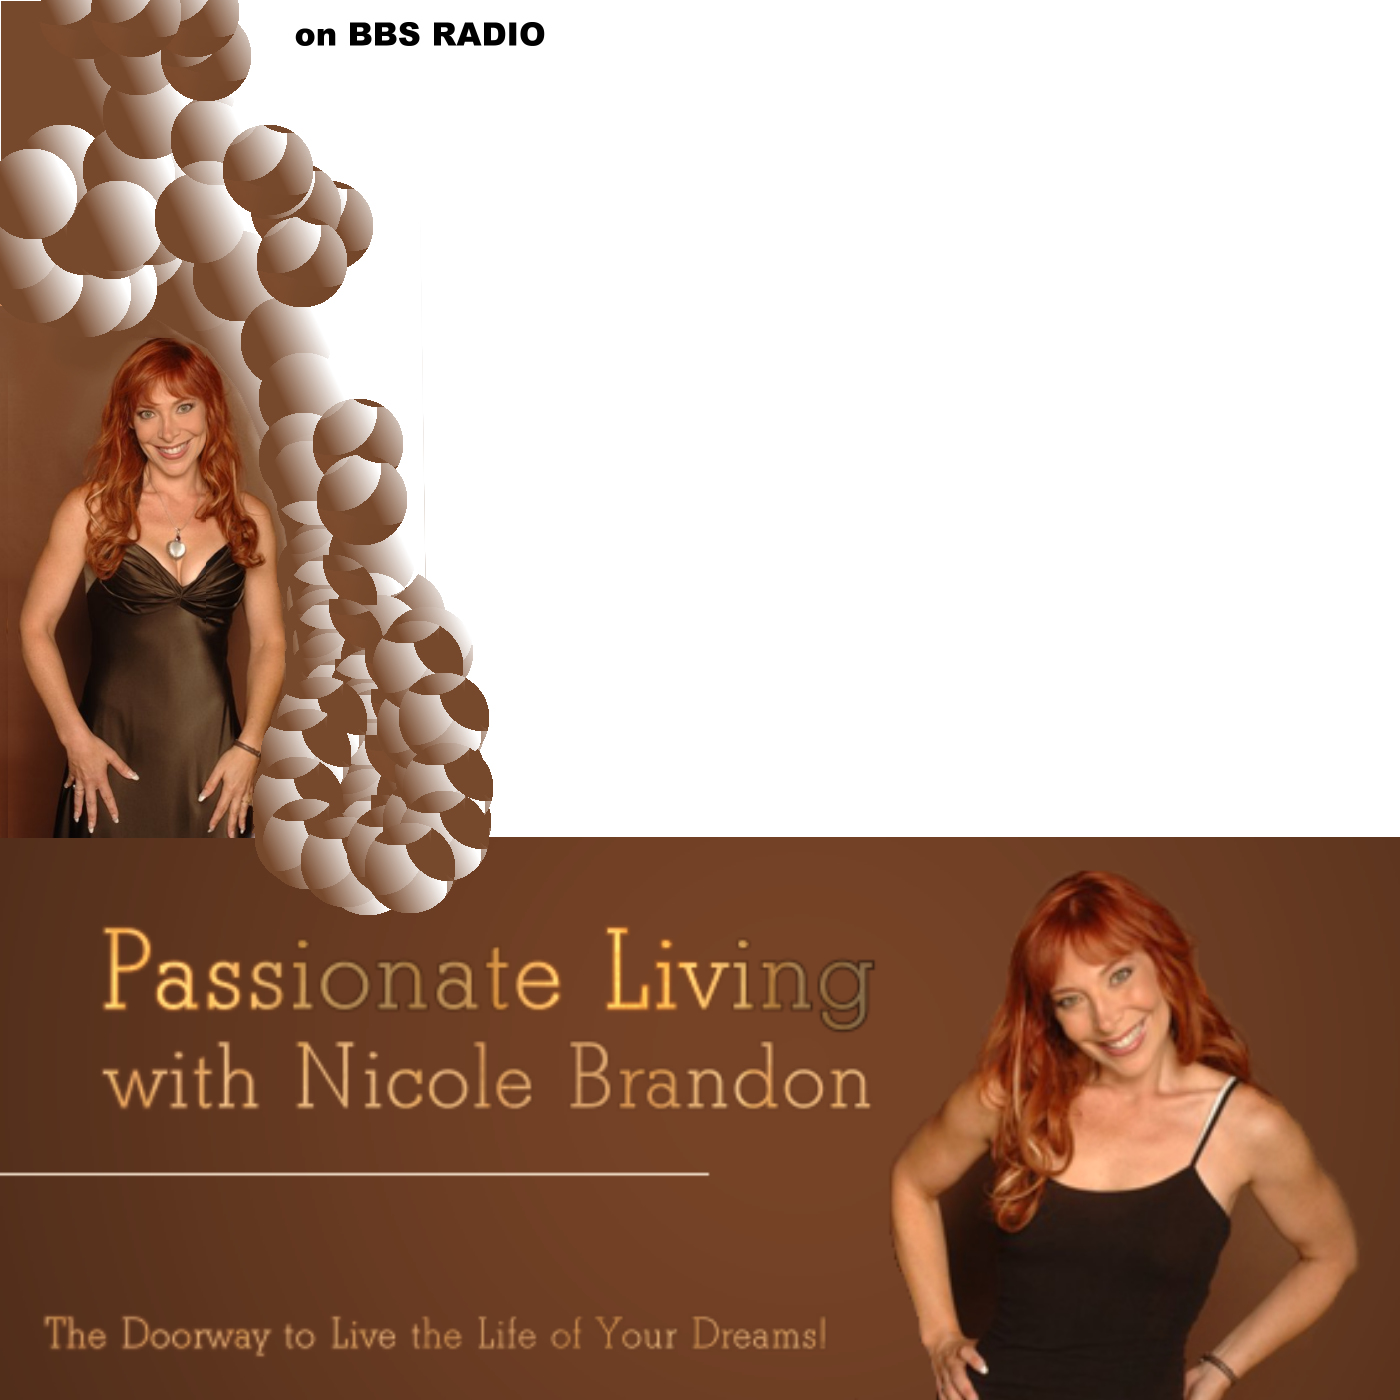 Passionate Living with Nicole Brandon:BBS Radio, BBS Network Inc.